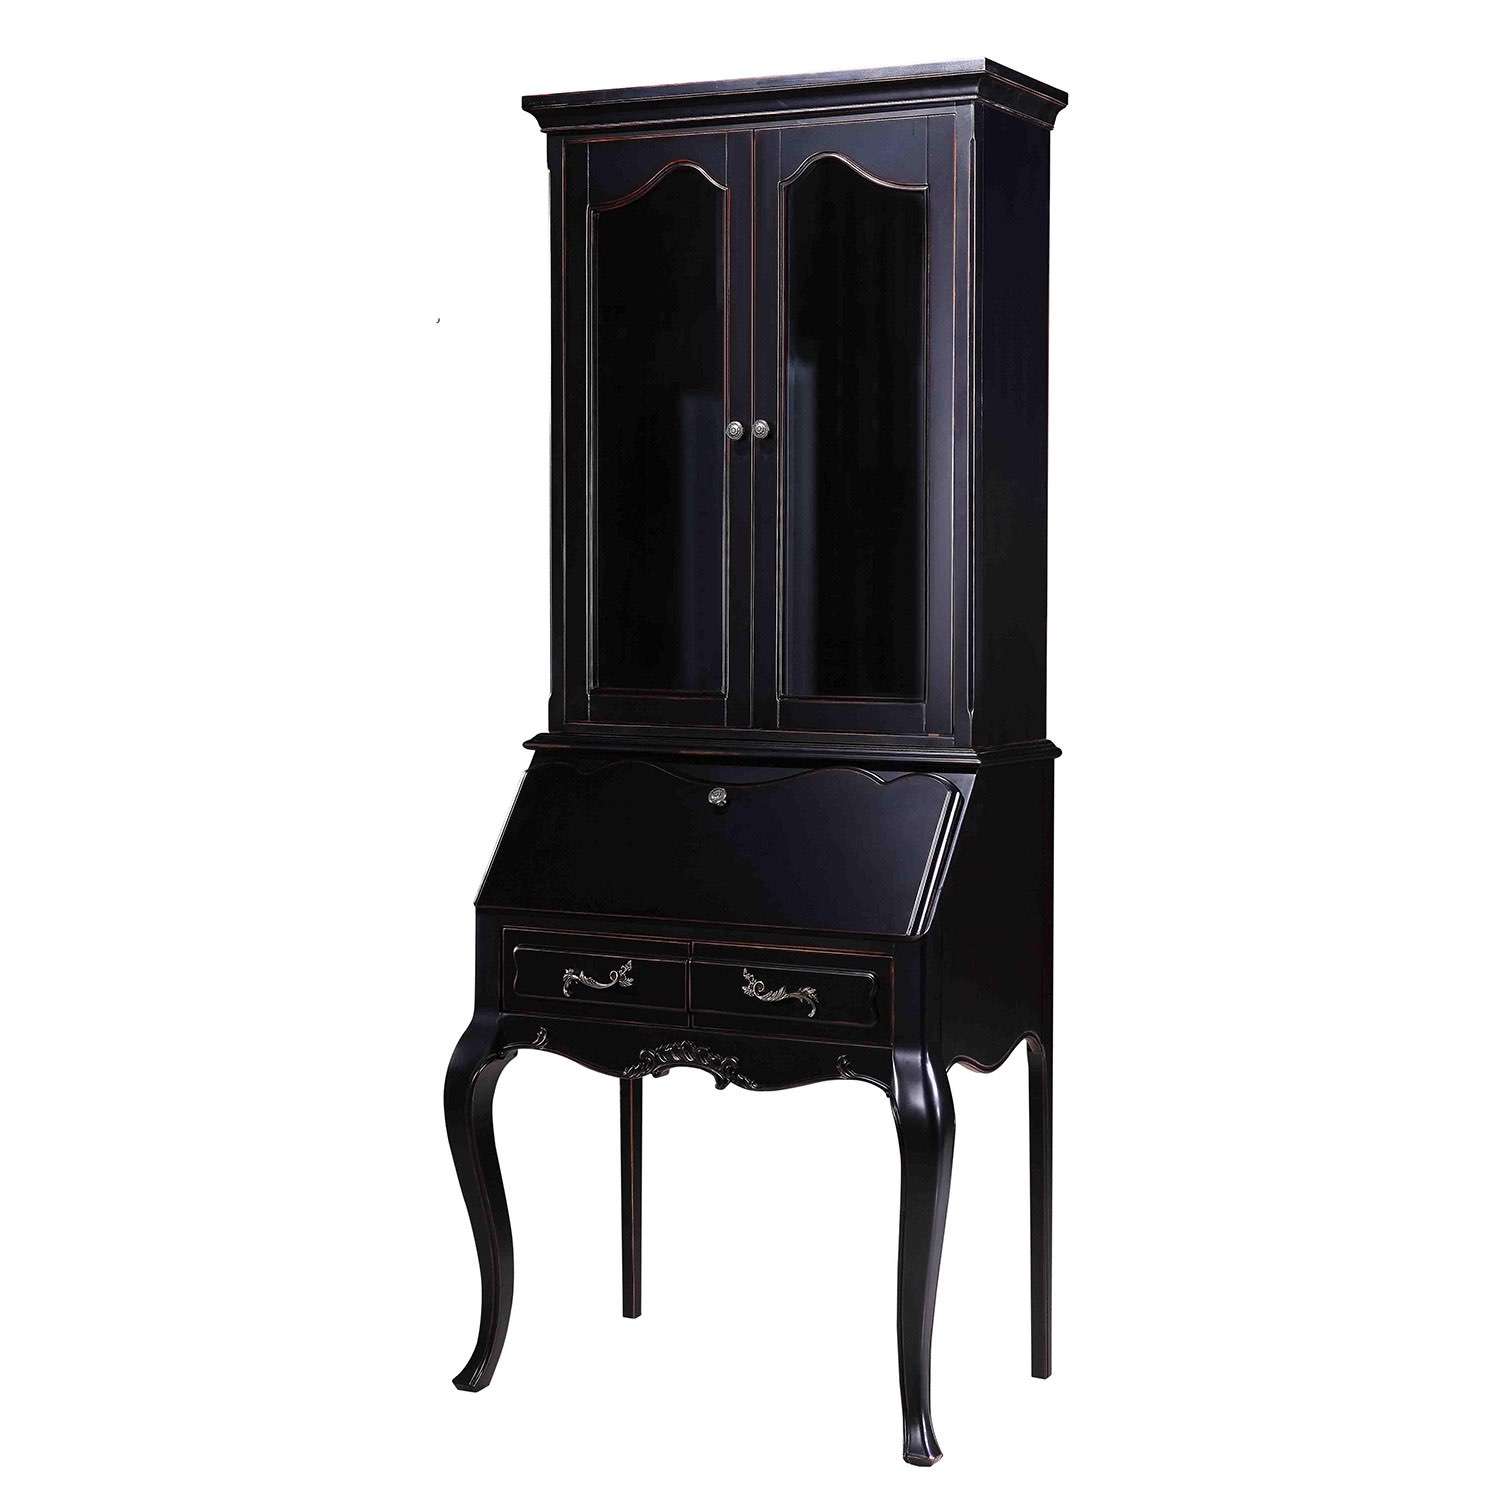 Decoration Cabinet|wine storage cabinet|Wine rack